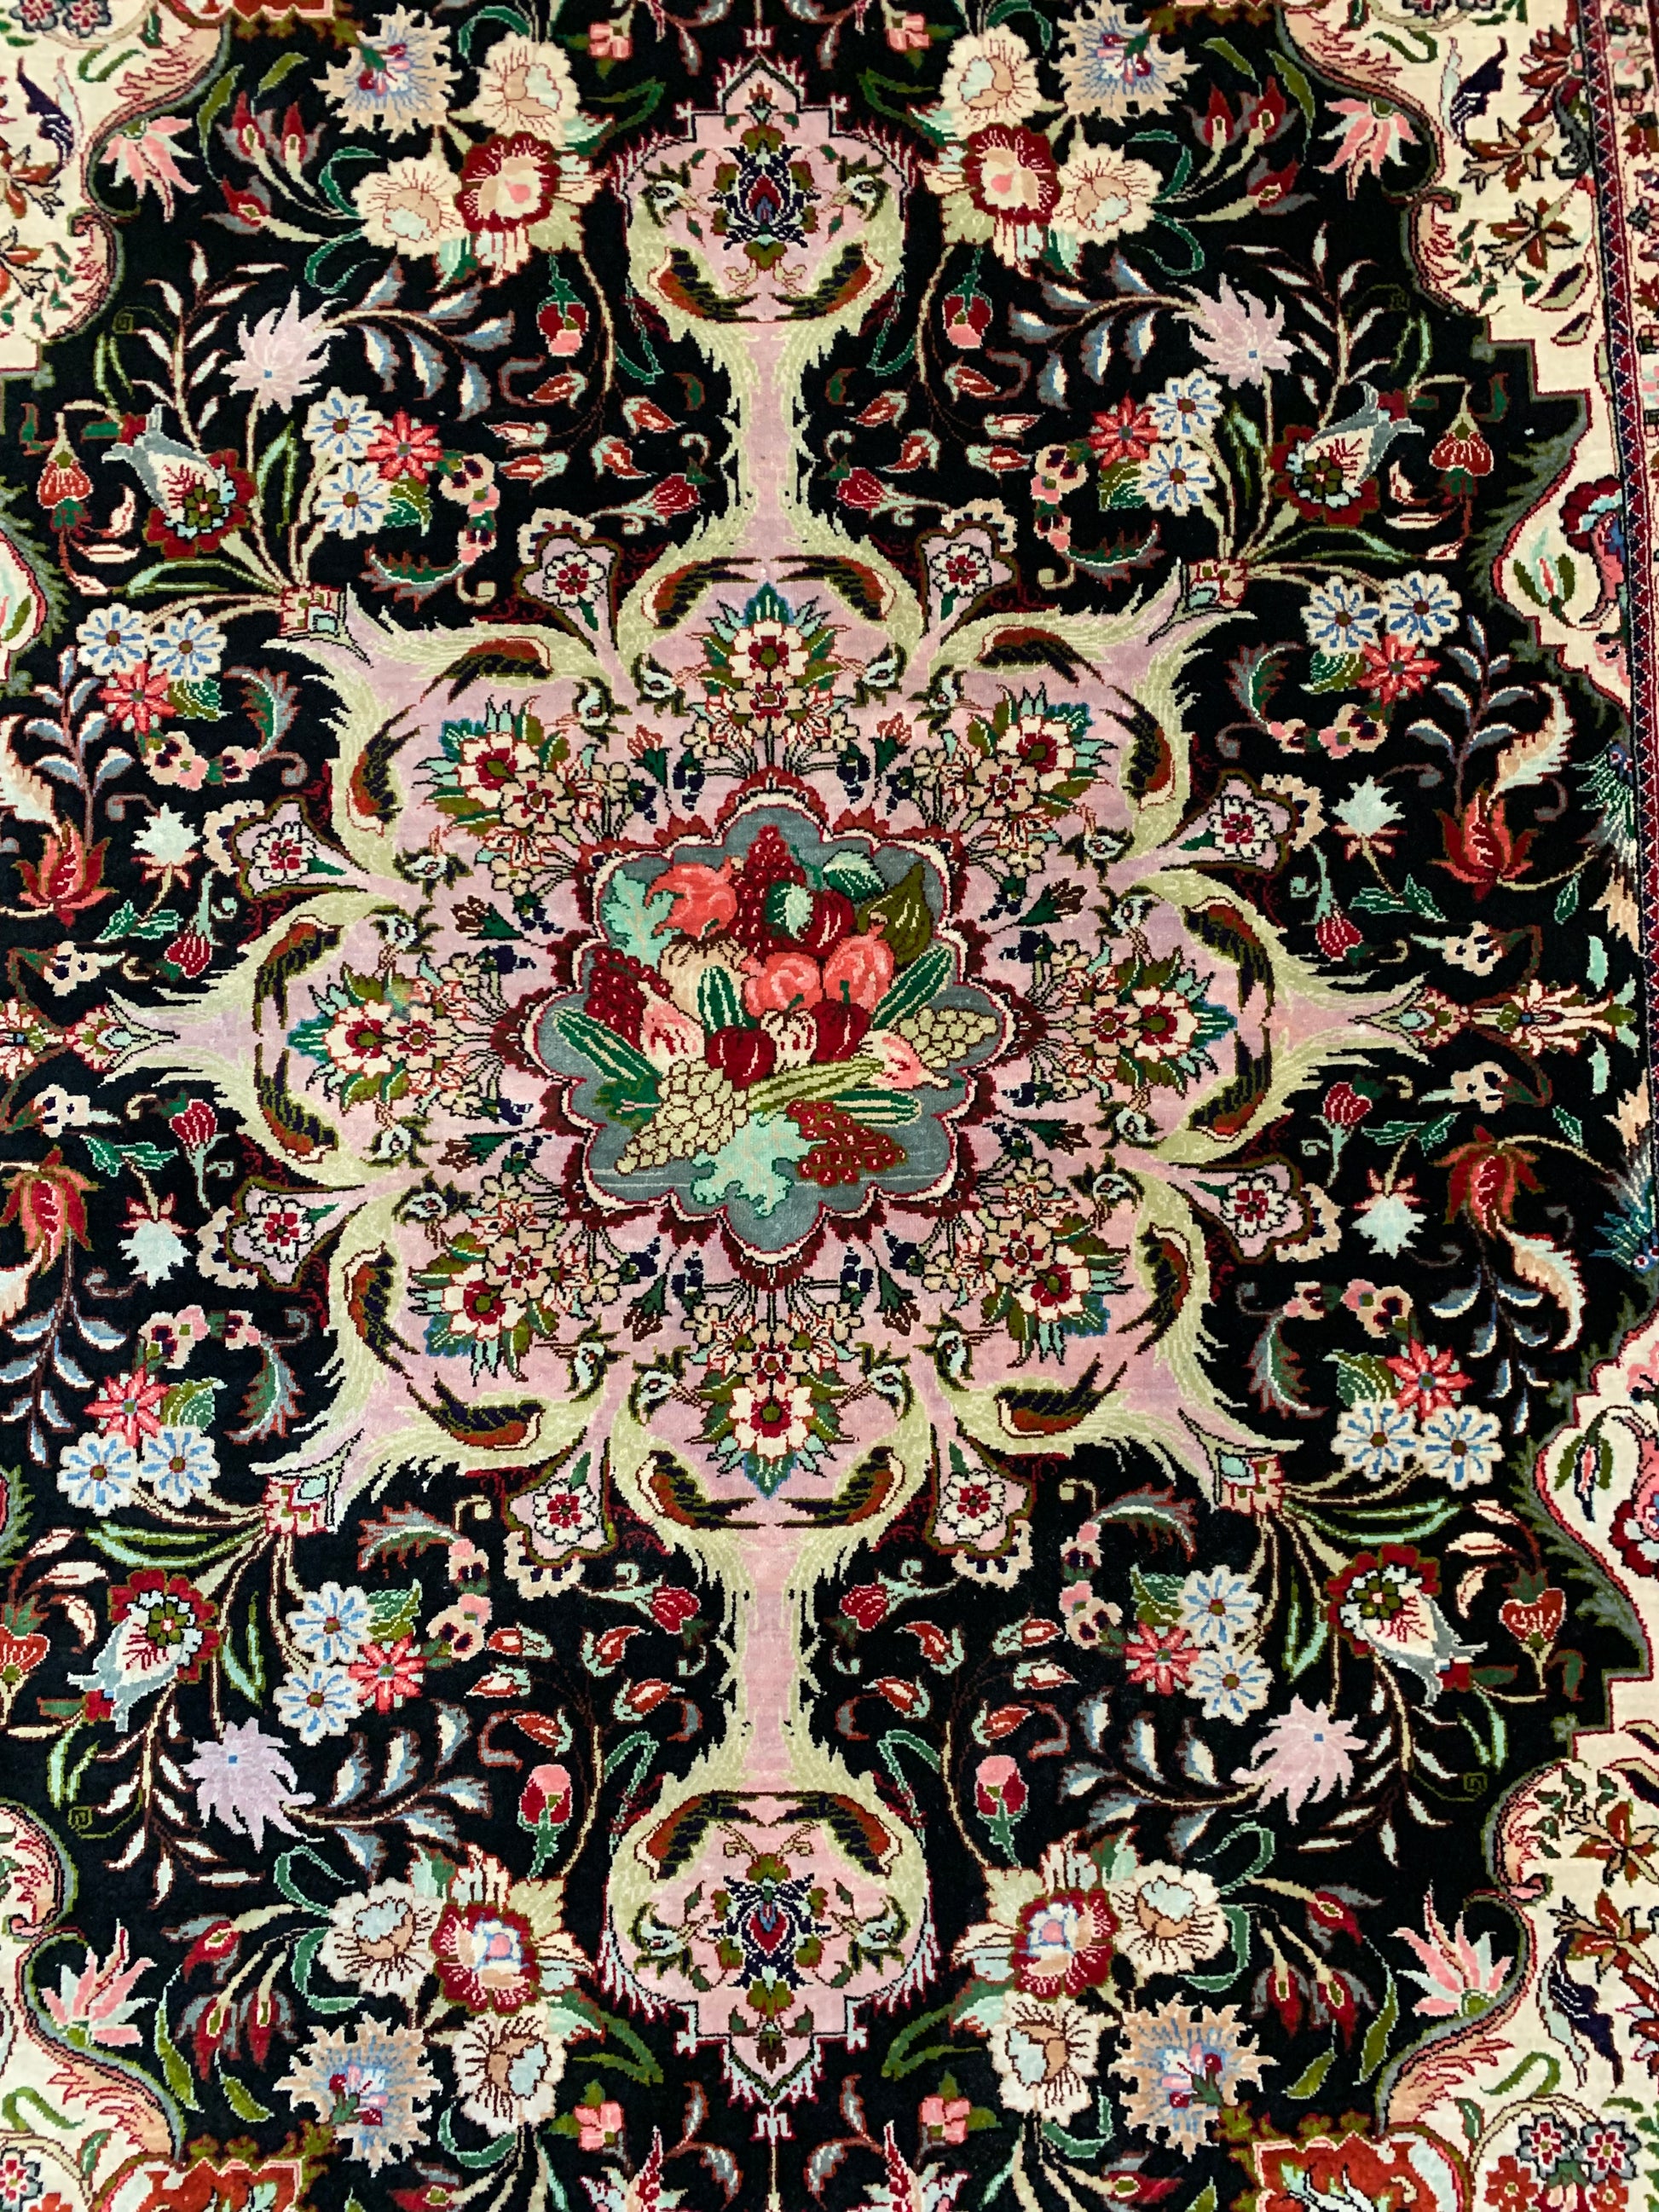 Wonderful vintage decorative Persian Qom silk rug - Hakiemie Rug Gallery